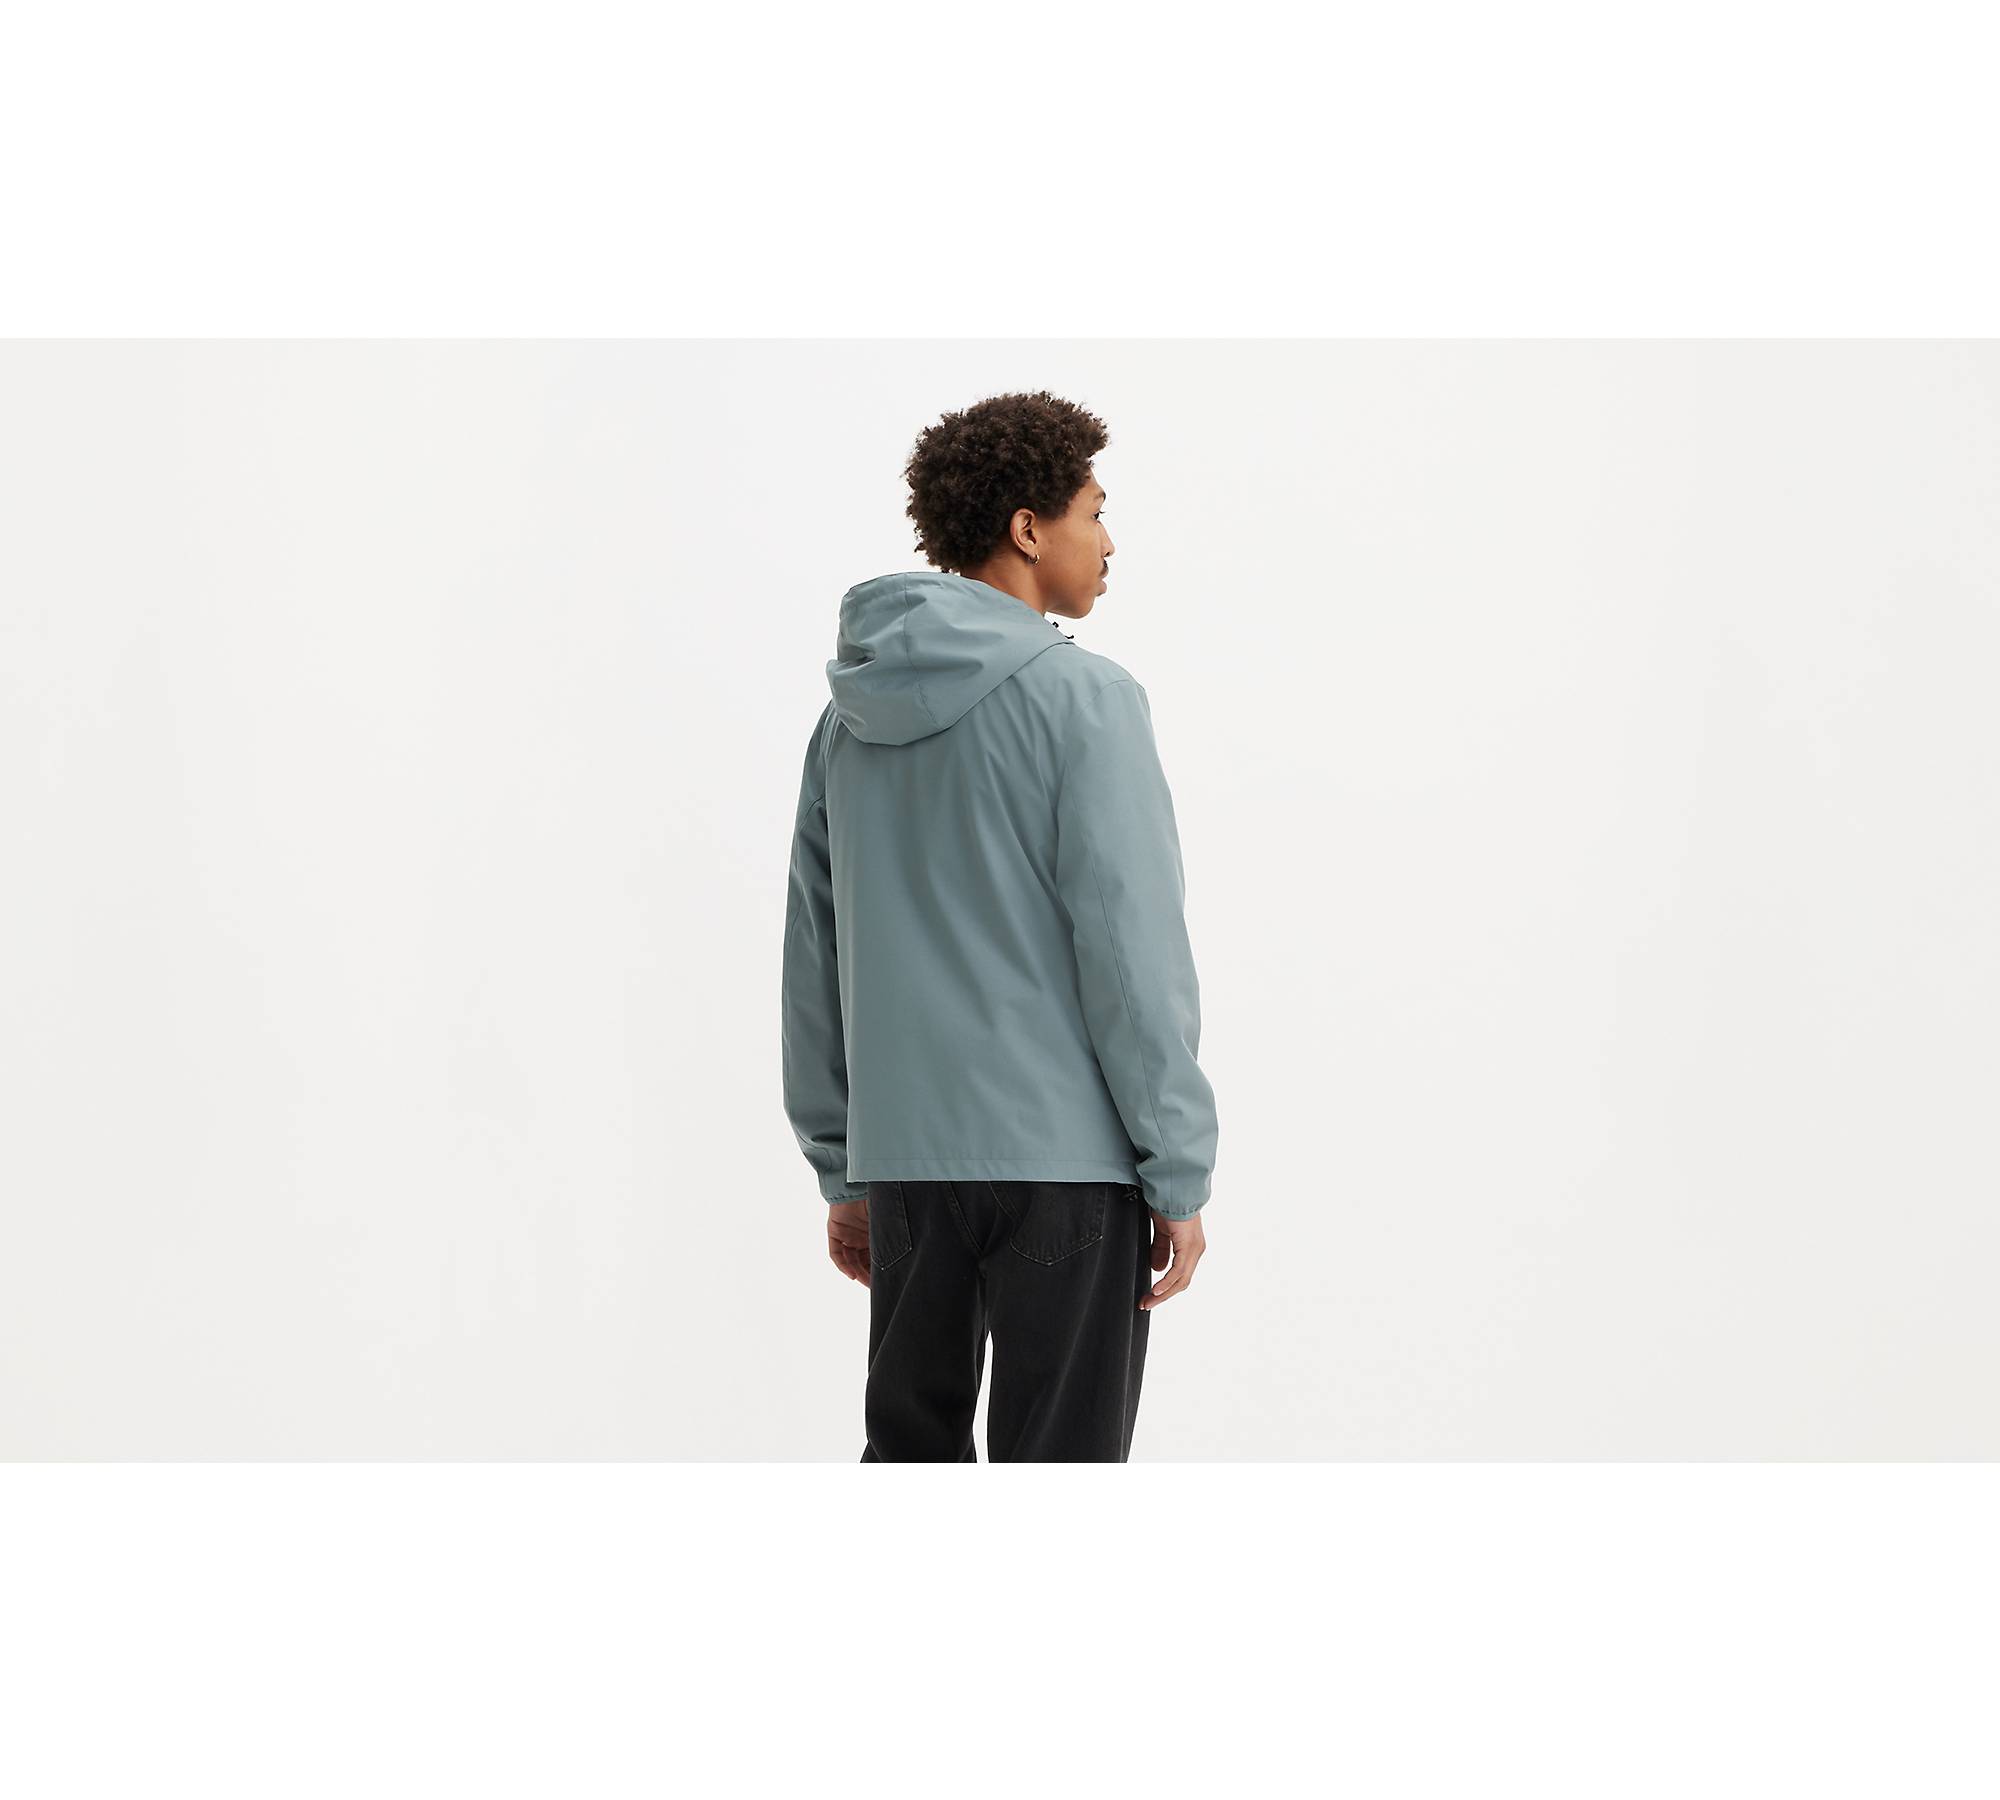 Liveday Jacket Hooded Coat Waterproof Warm Windbreaker for Men Fishing Hiking, Men's, Size: Medium, Black